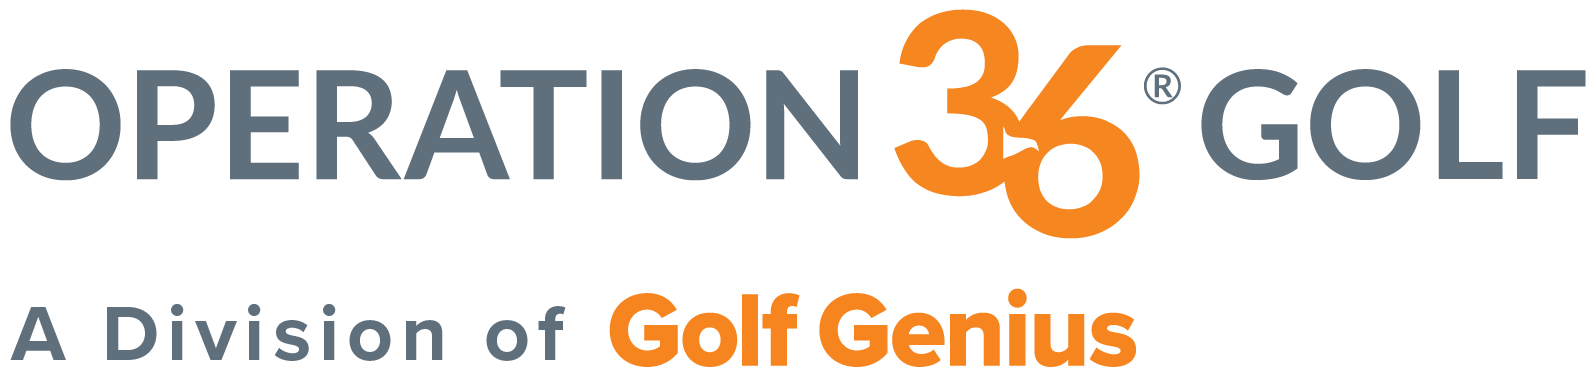 Operation 36 Golf - A Division of Golf Genius Logo